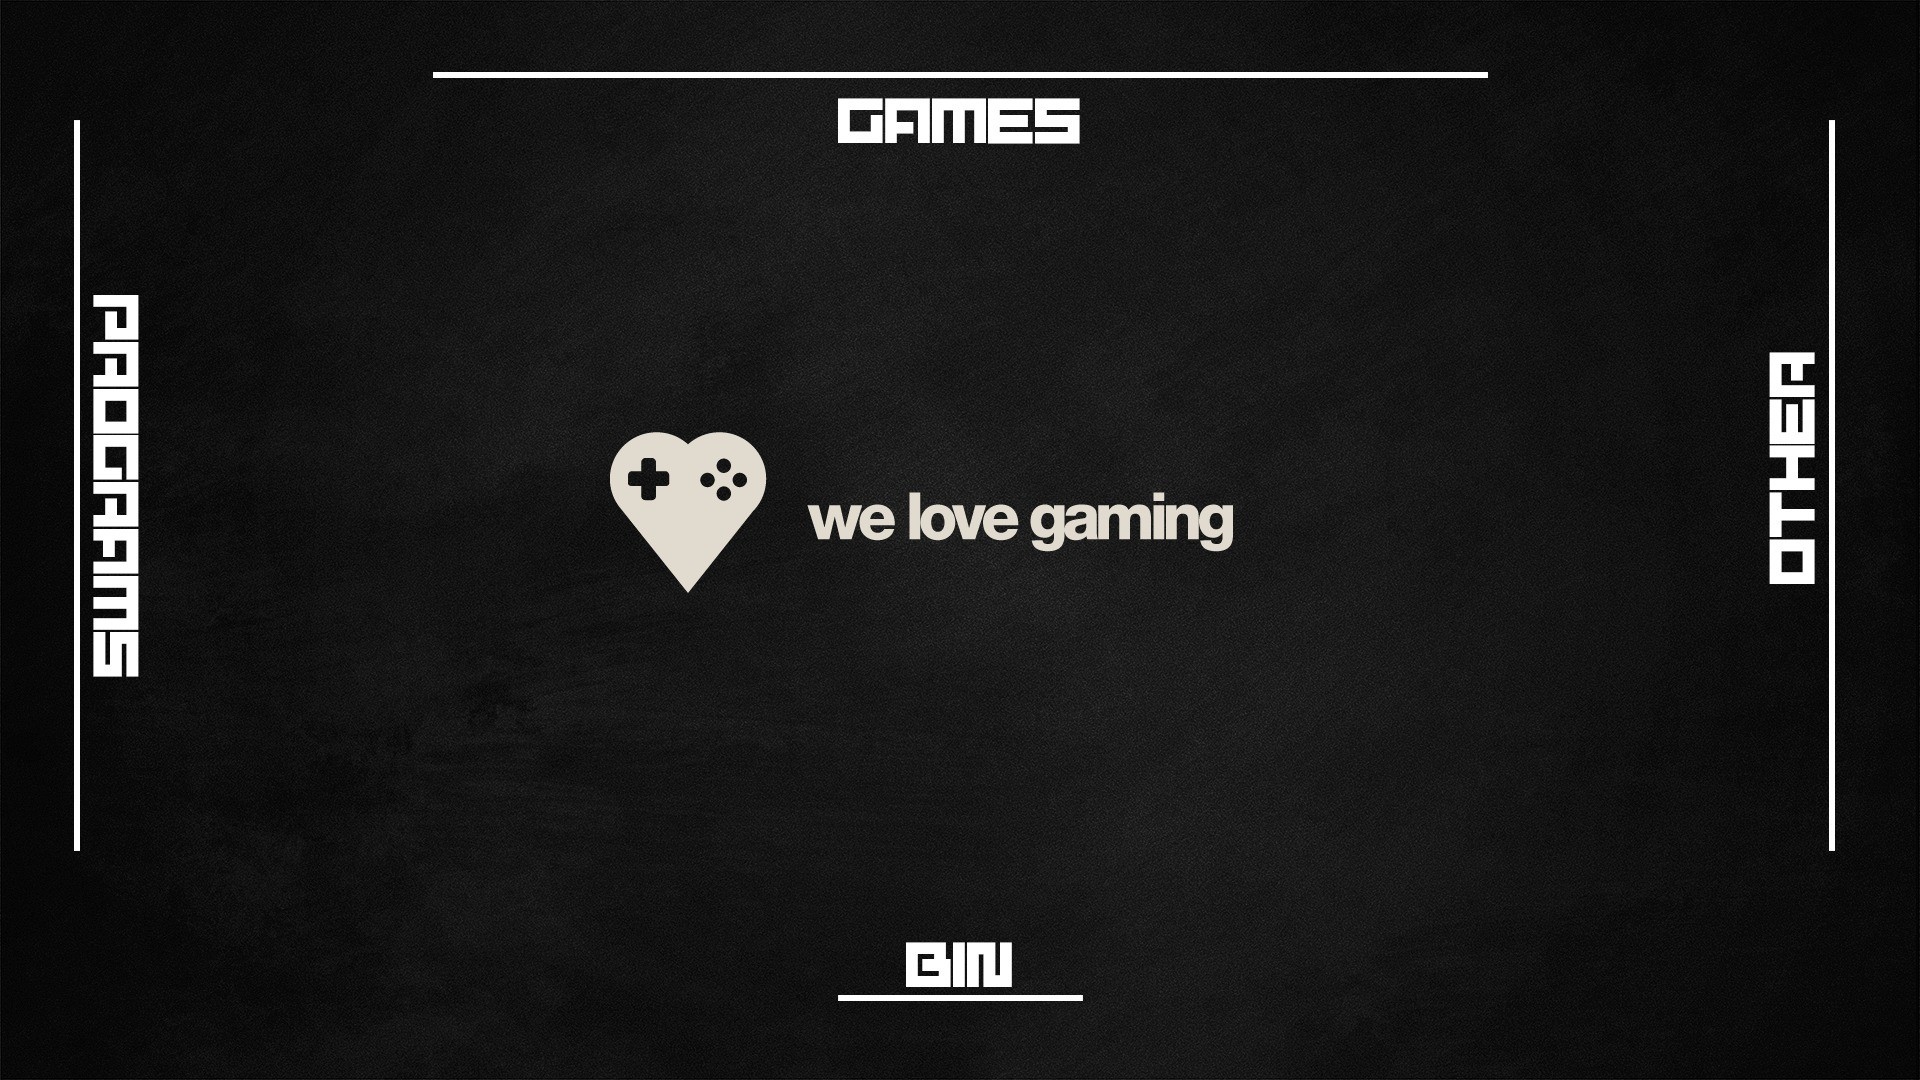 Лов гейм песня. I Love games. Astro Gaming Wallpaper. Game over. We Love games.